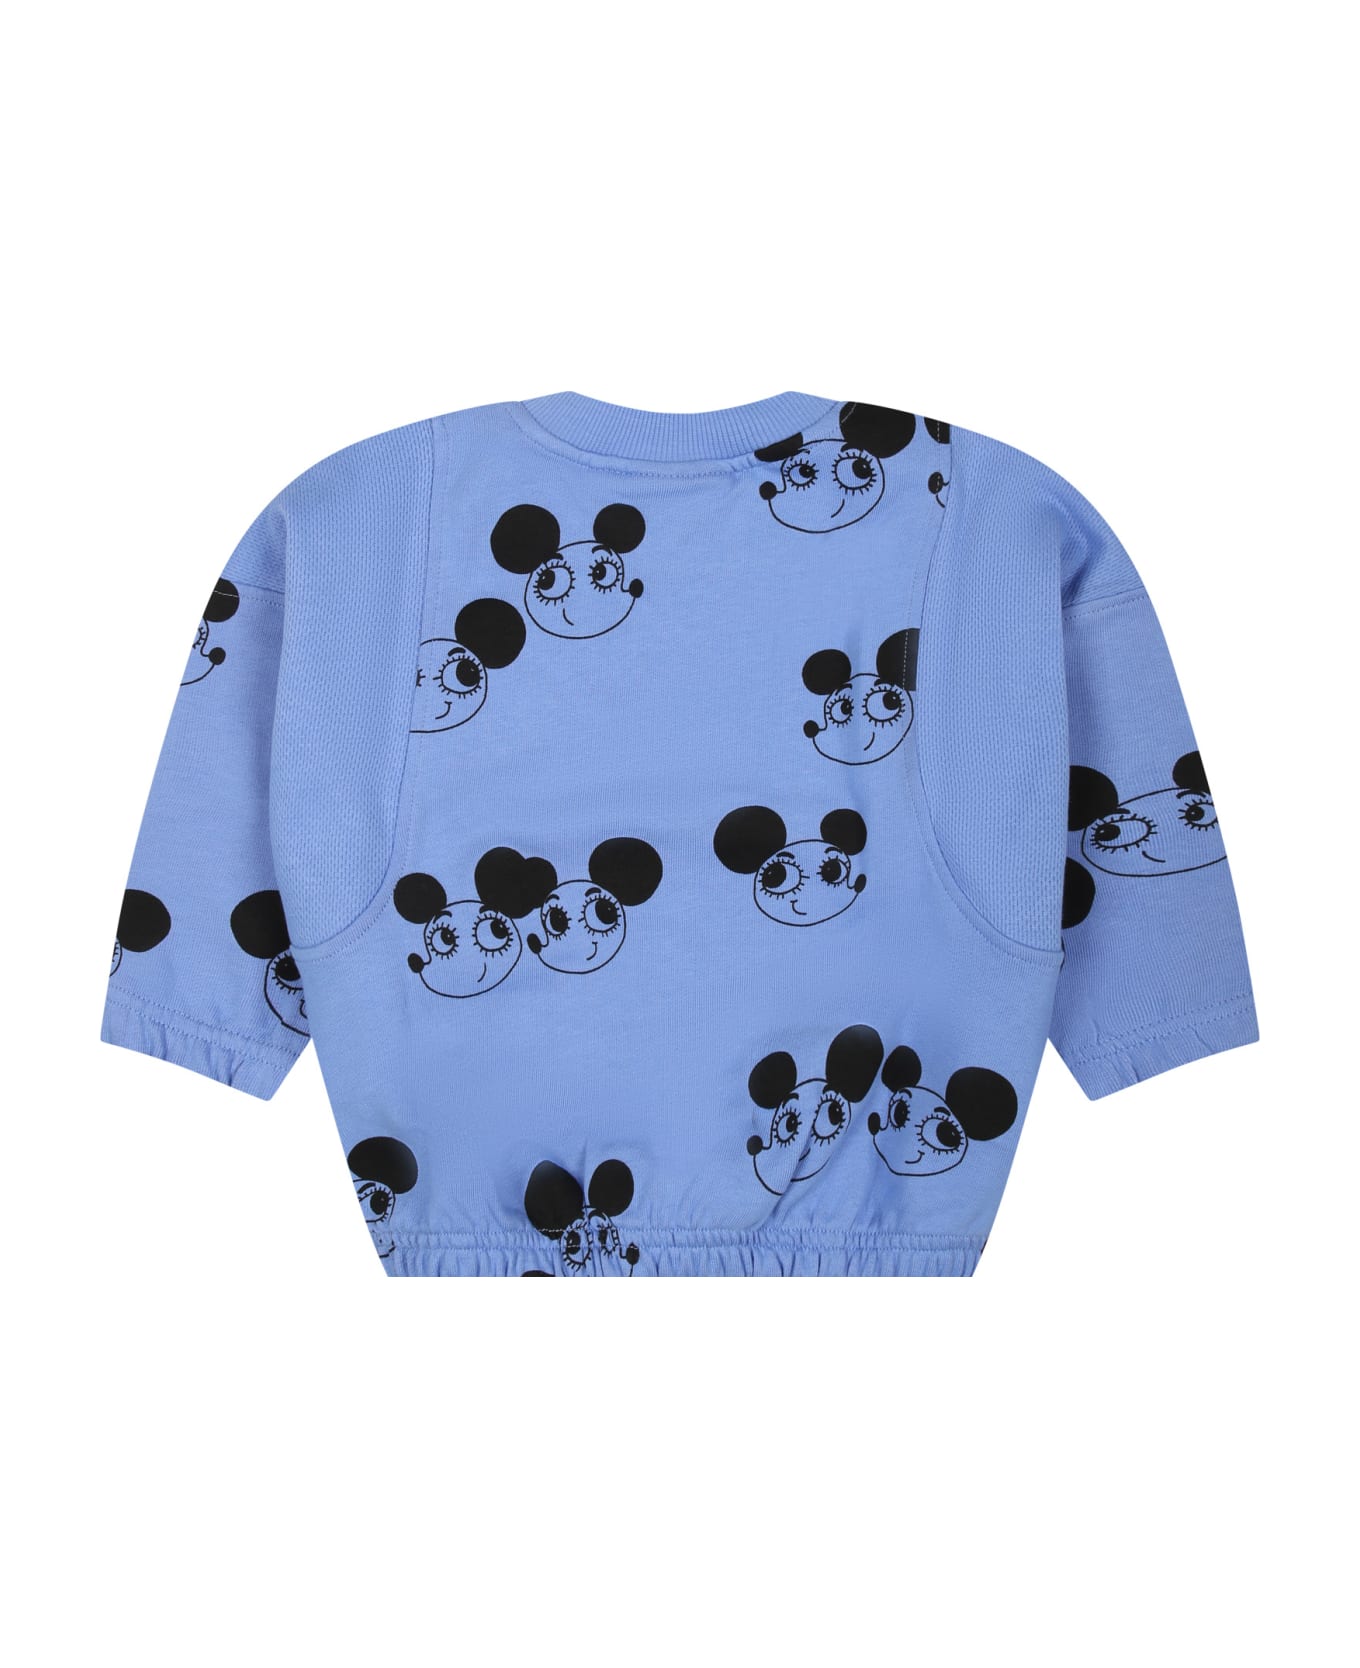 Mini Rodini Light Blue Sweatshirt For Baby Boy With Mice - Light Blue